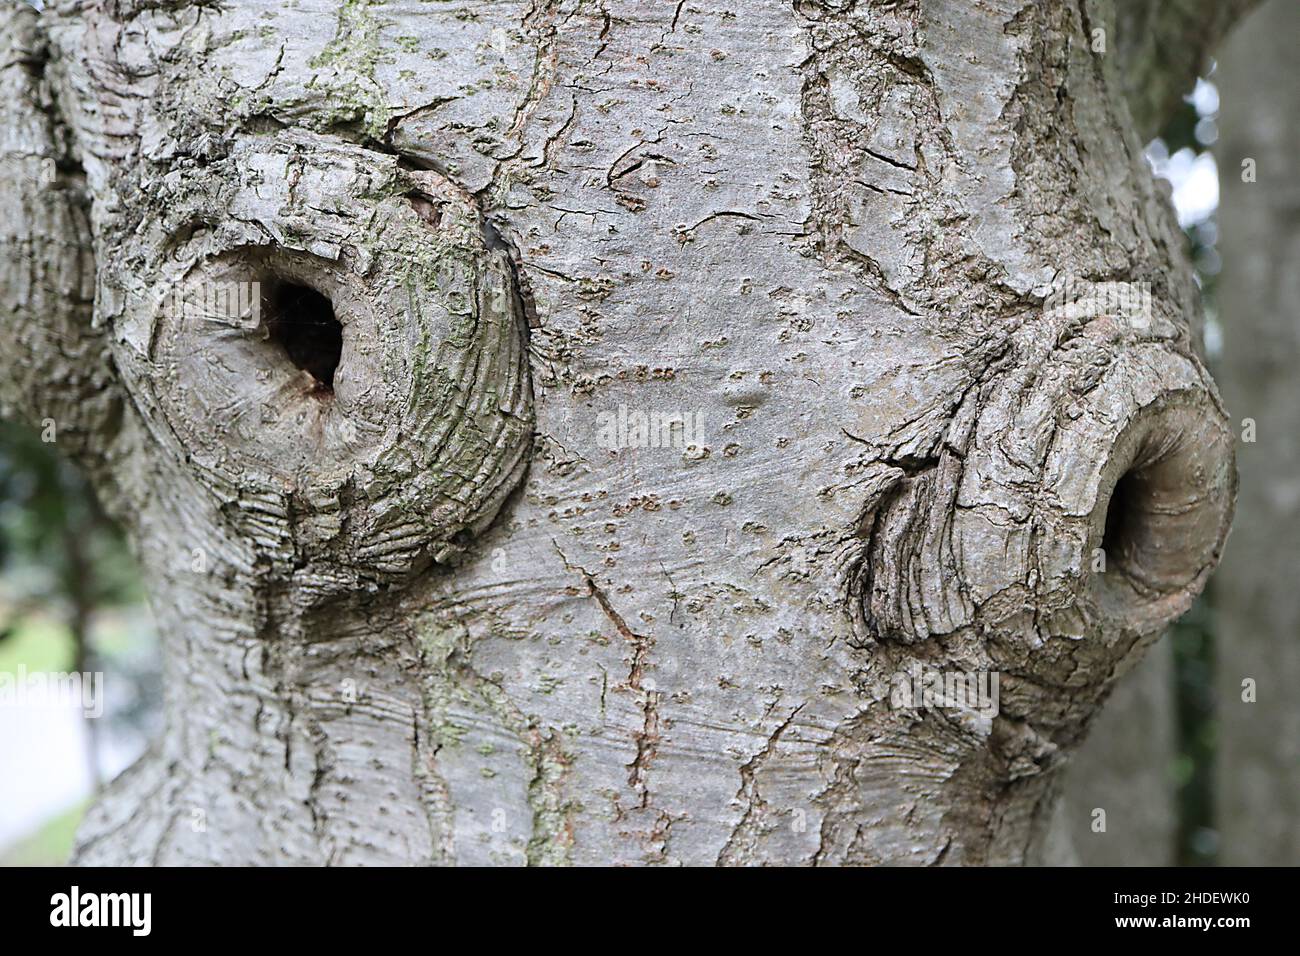 Ilex x altaclerensis ‘Hendersonii’ holly Hendersonii – buff grey bark with protruding circular whorls, January, England, UK Stock Photo